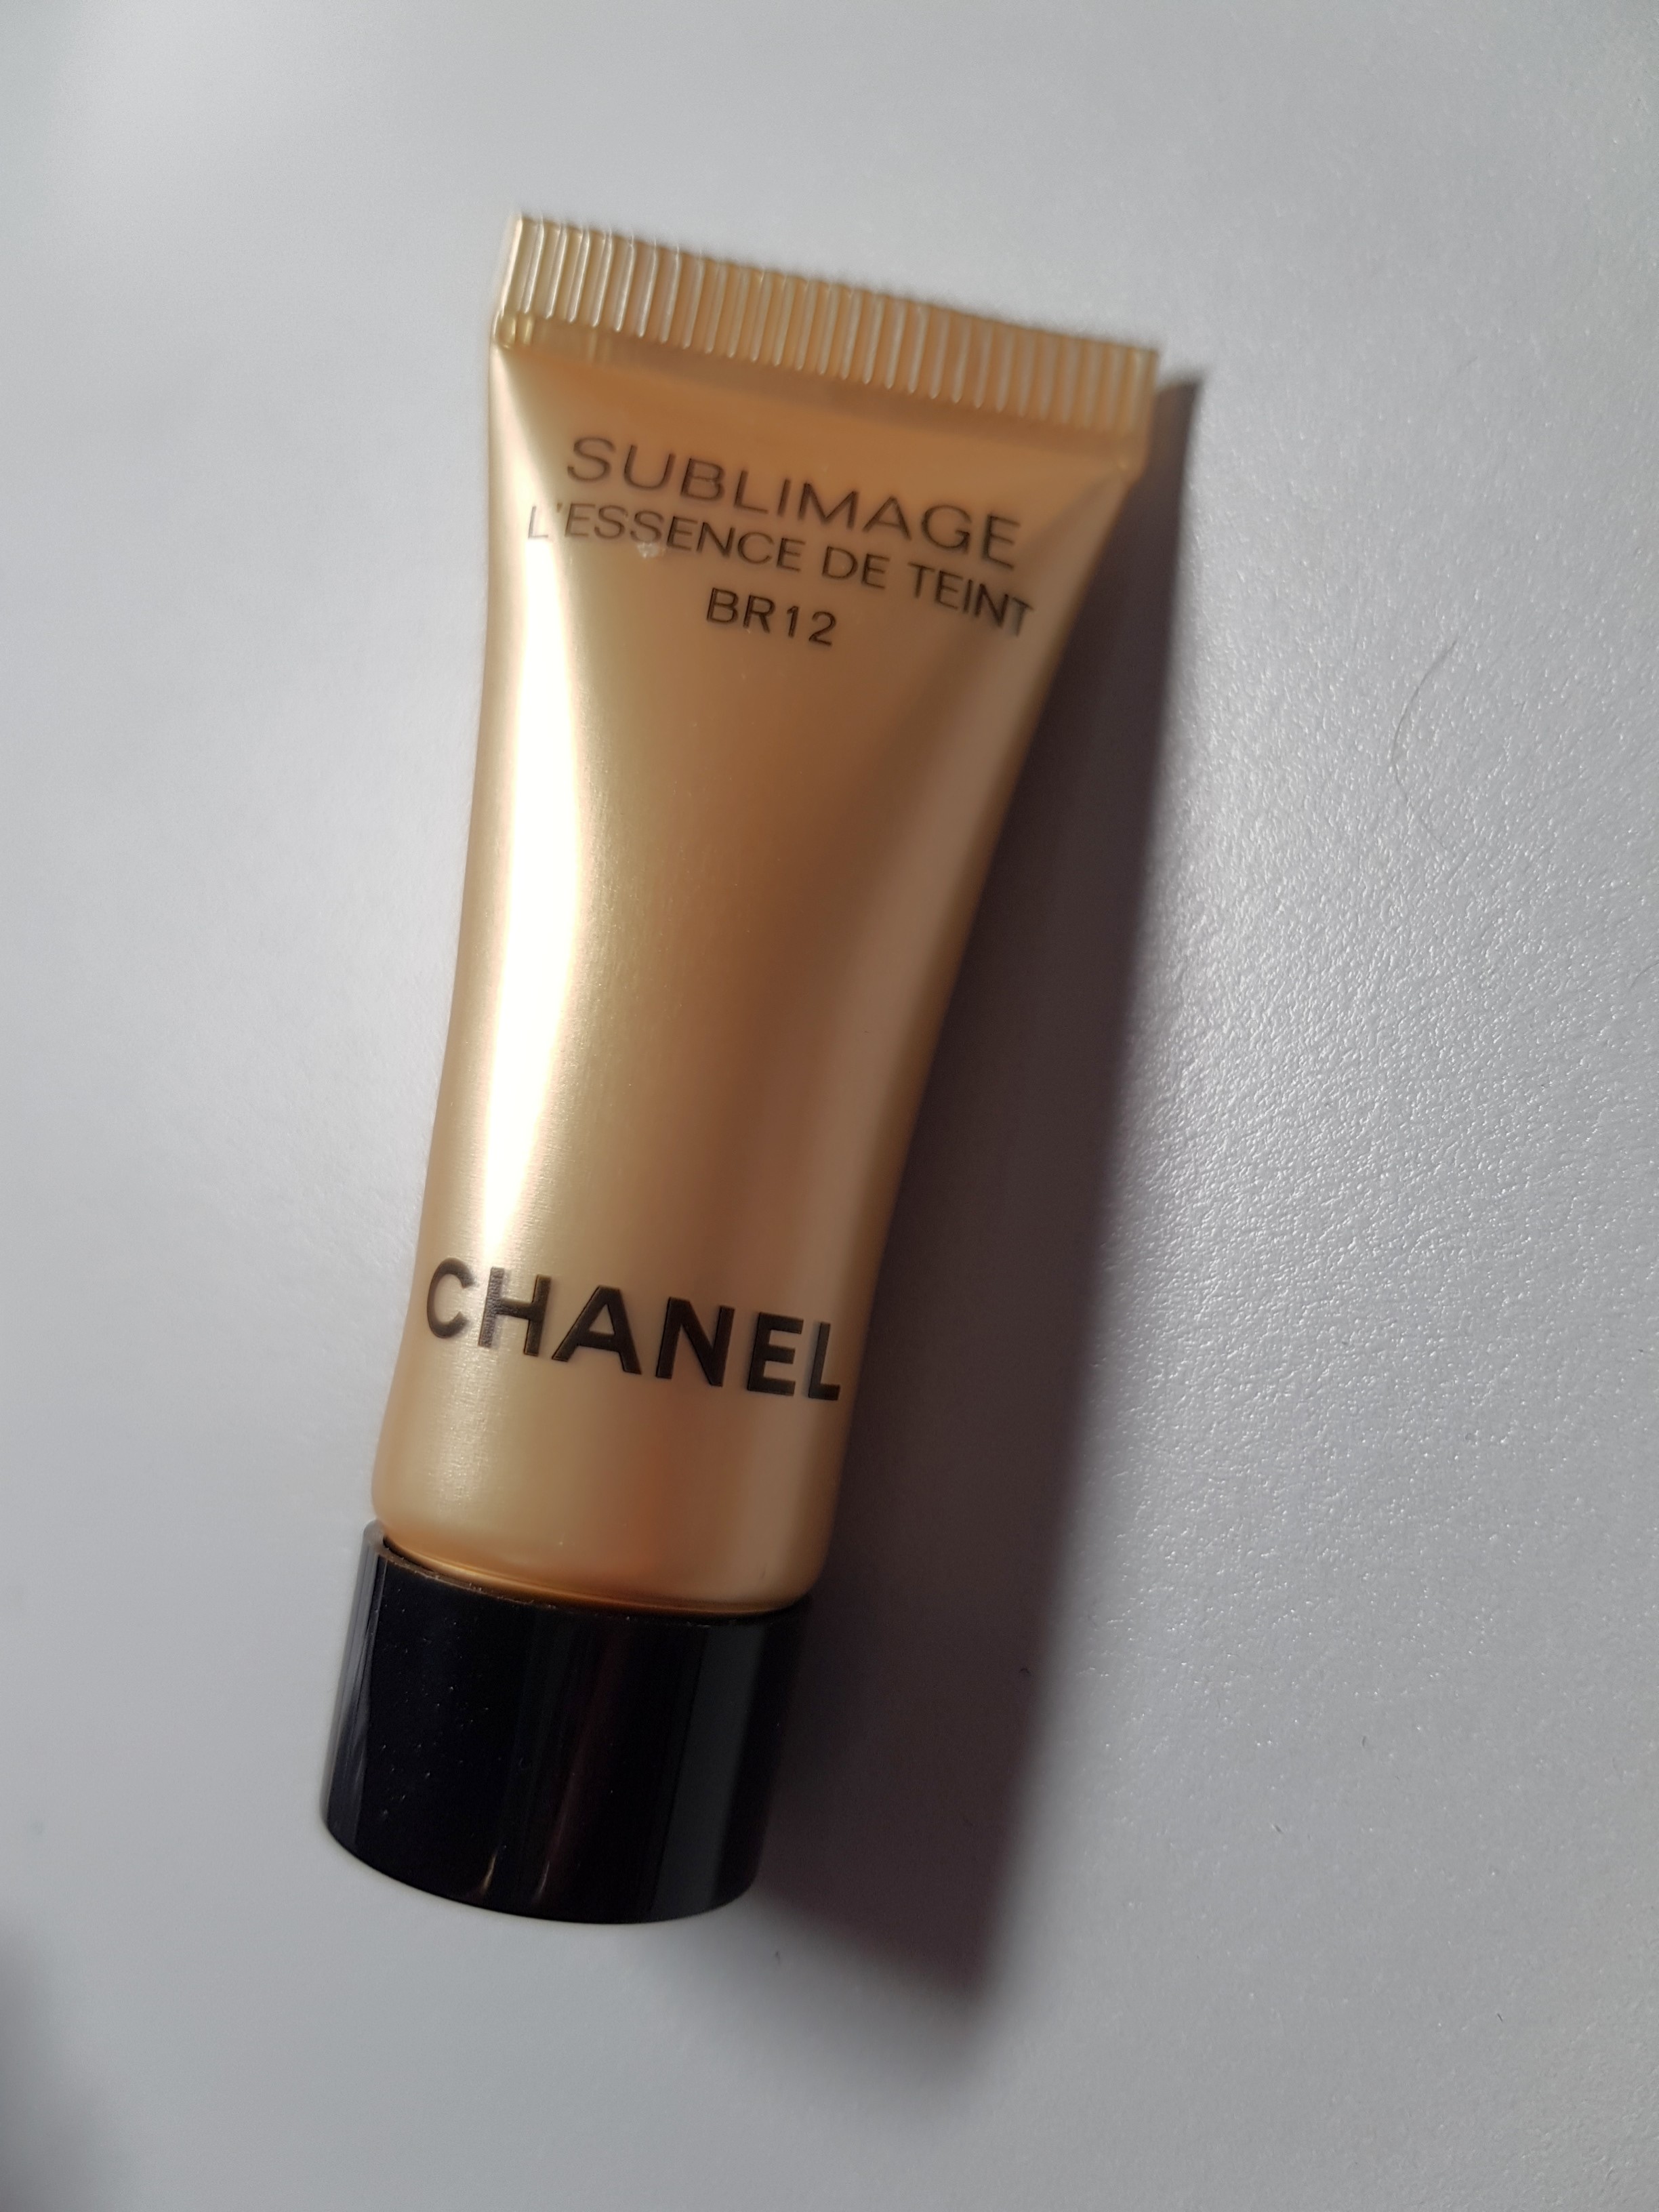 CHANEL, Makeup, Chanel Sublimage Le Teint 2beige Rose Nwt